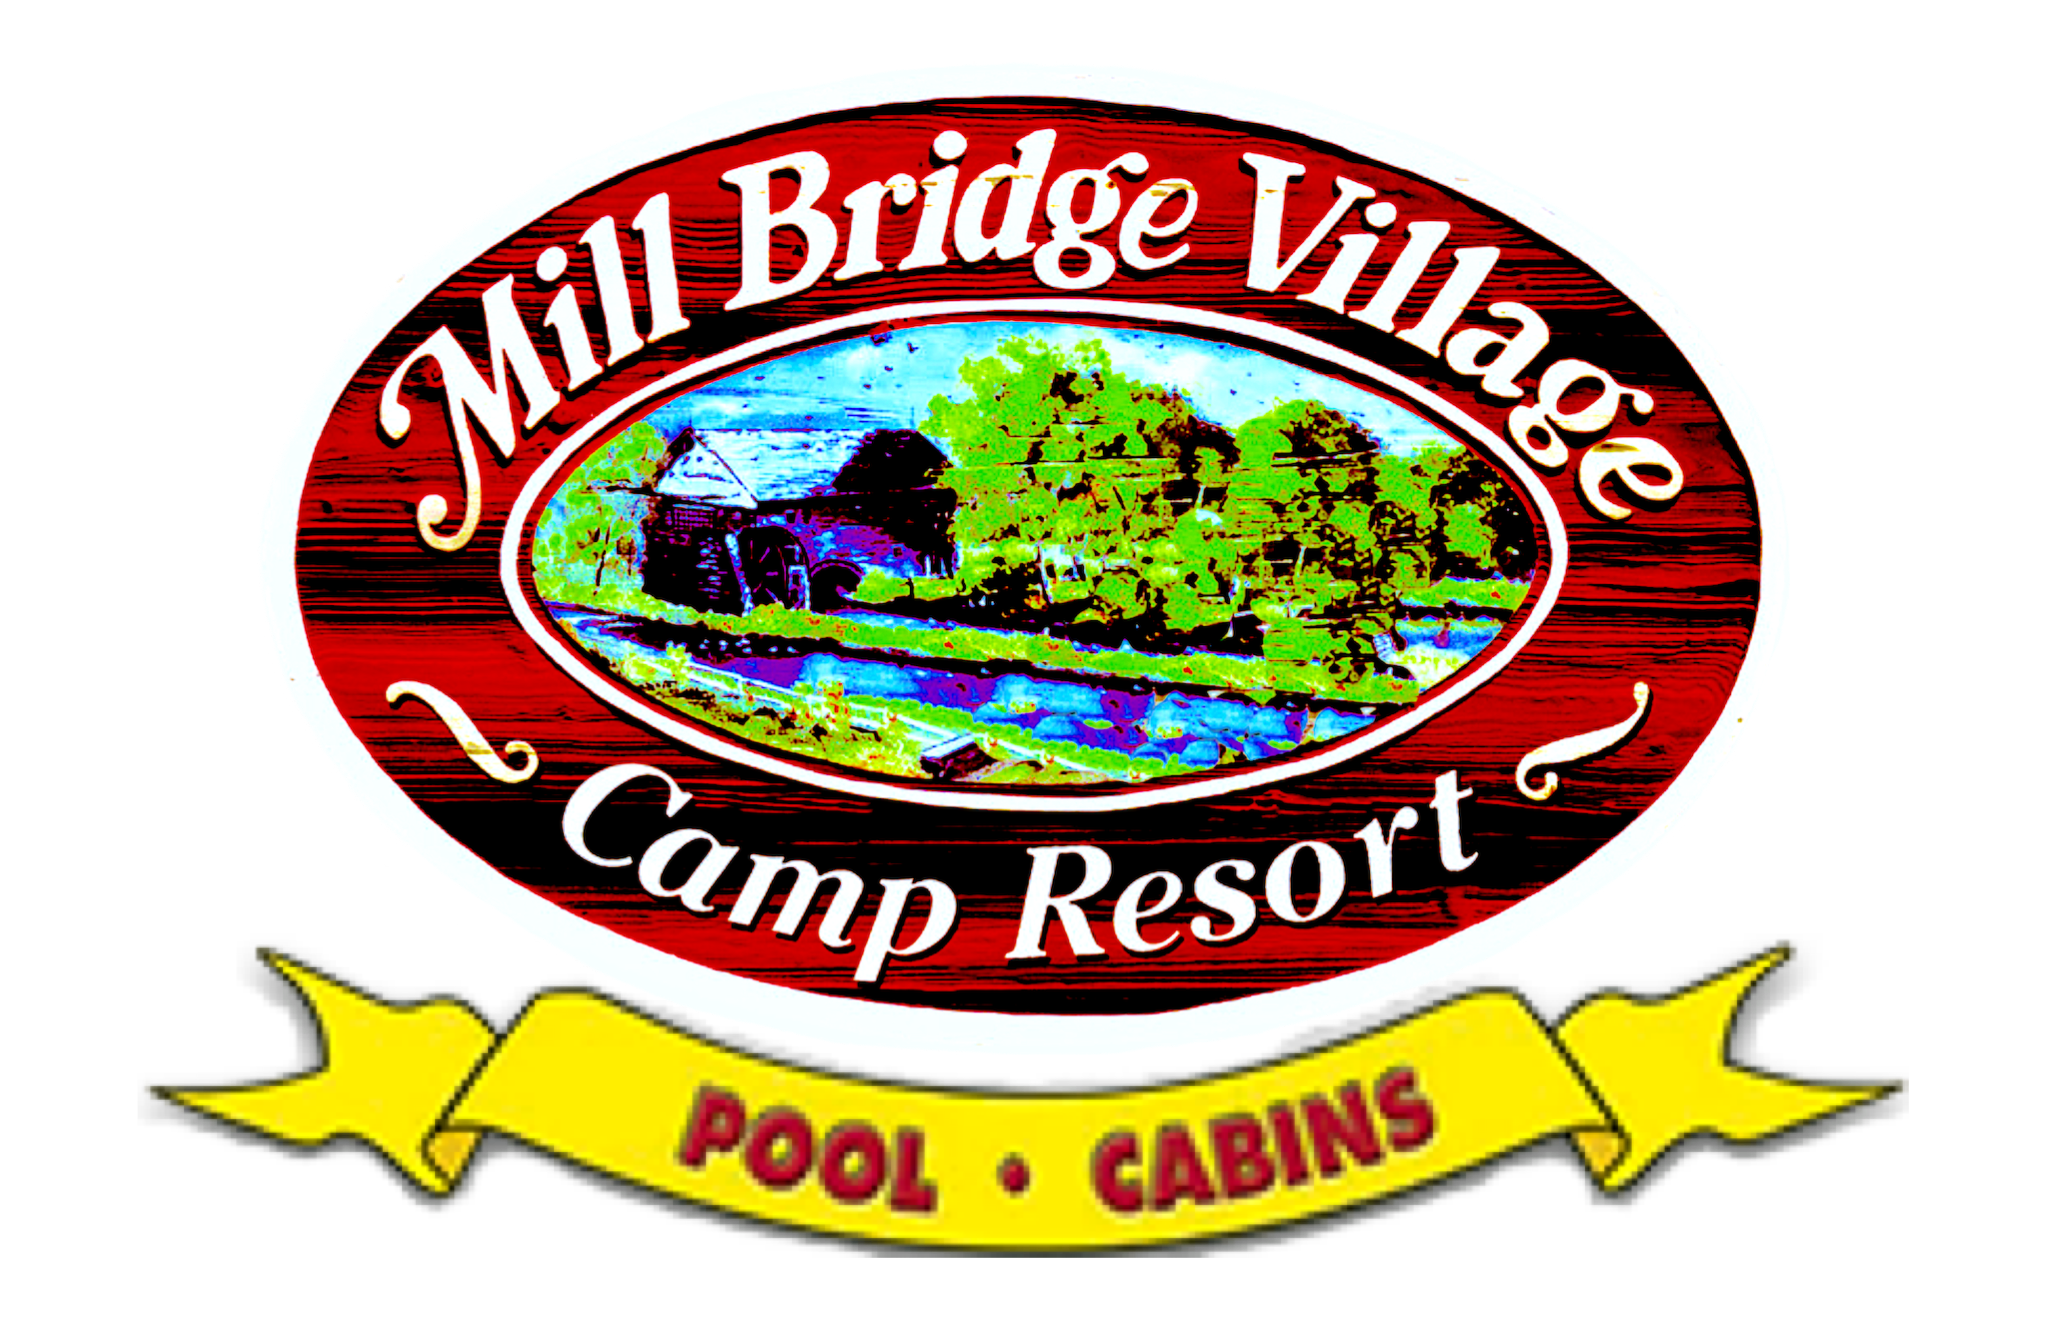 mill bridge village and camp resort lancaster pennsylvania